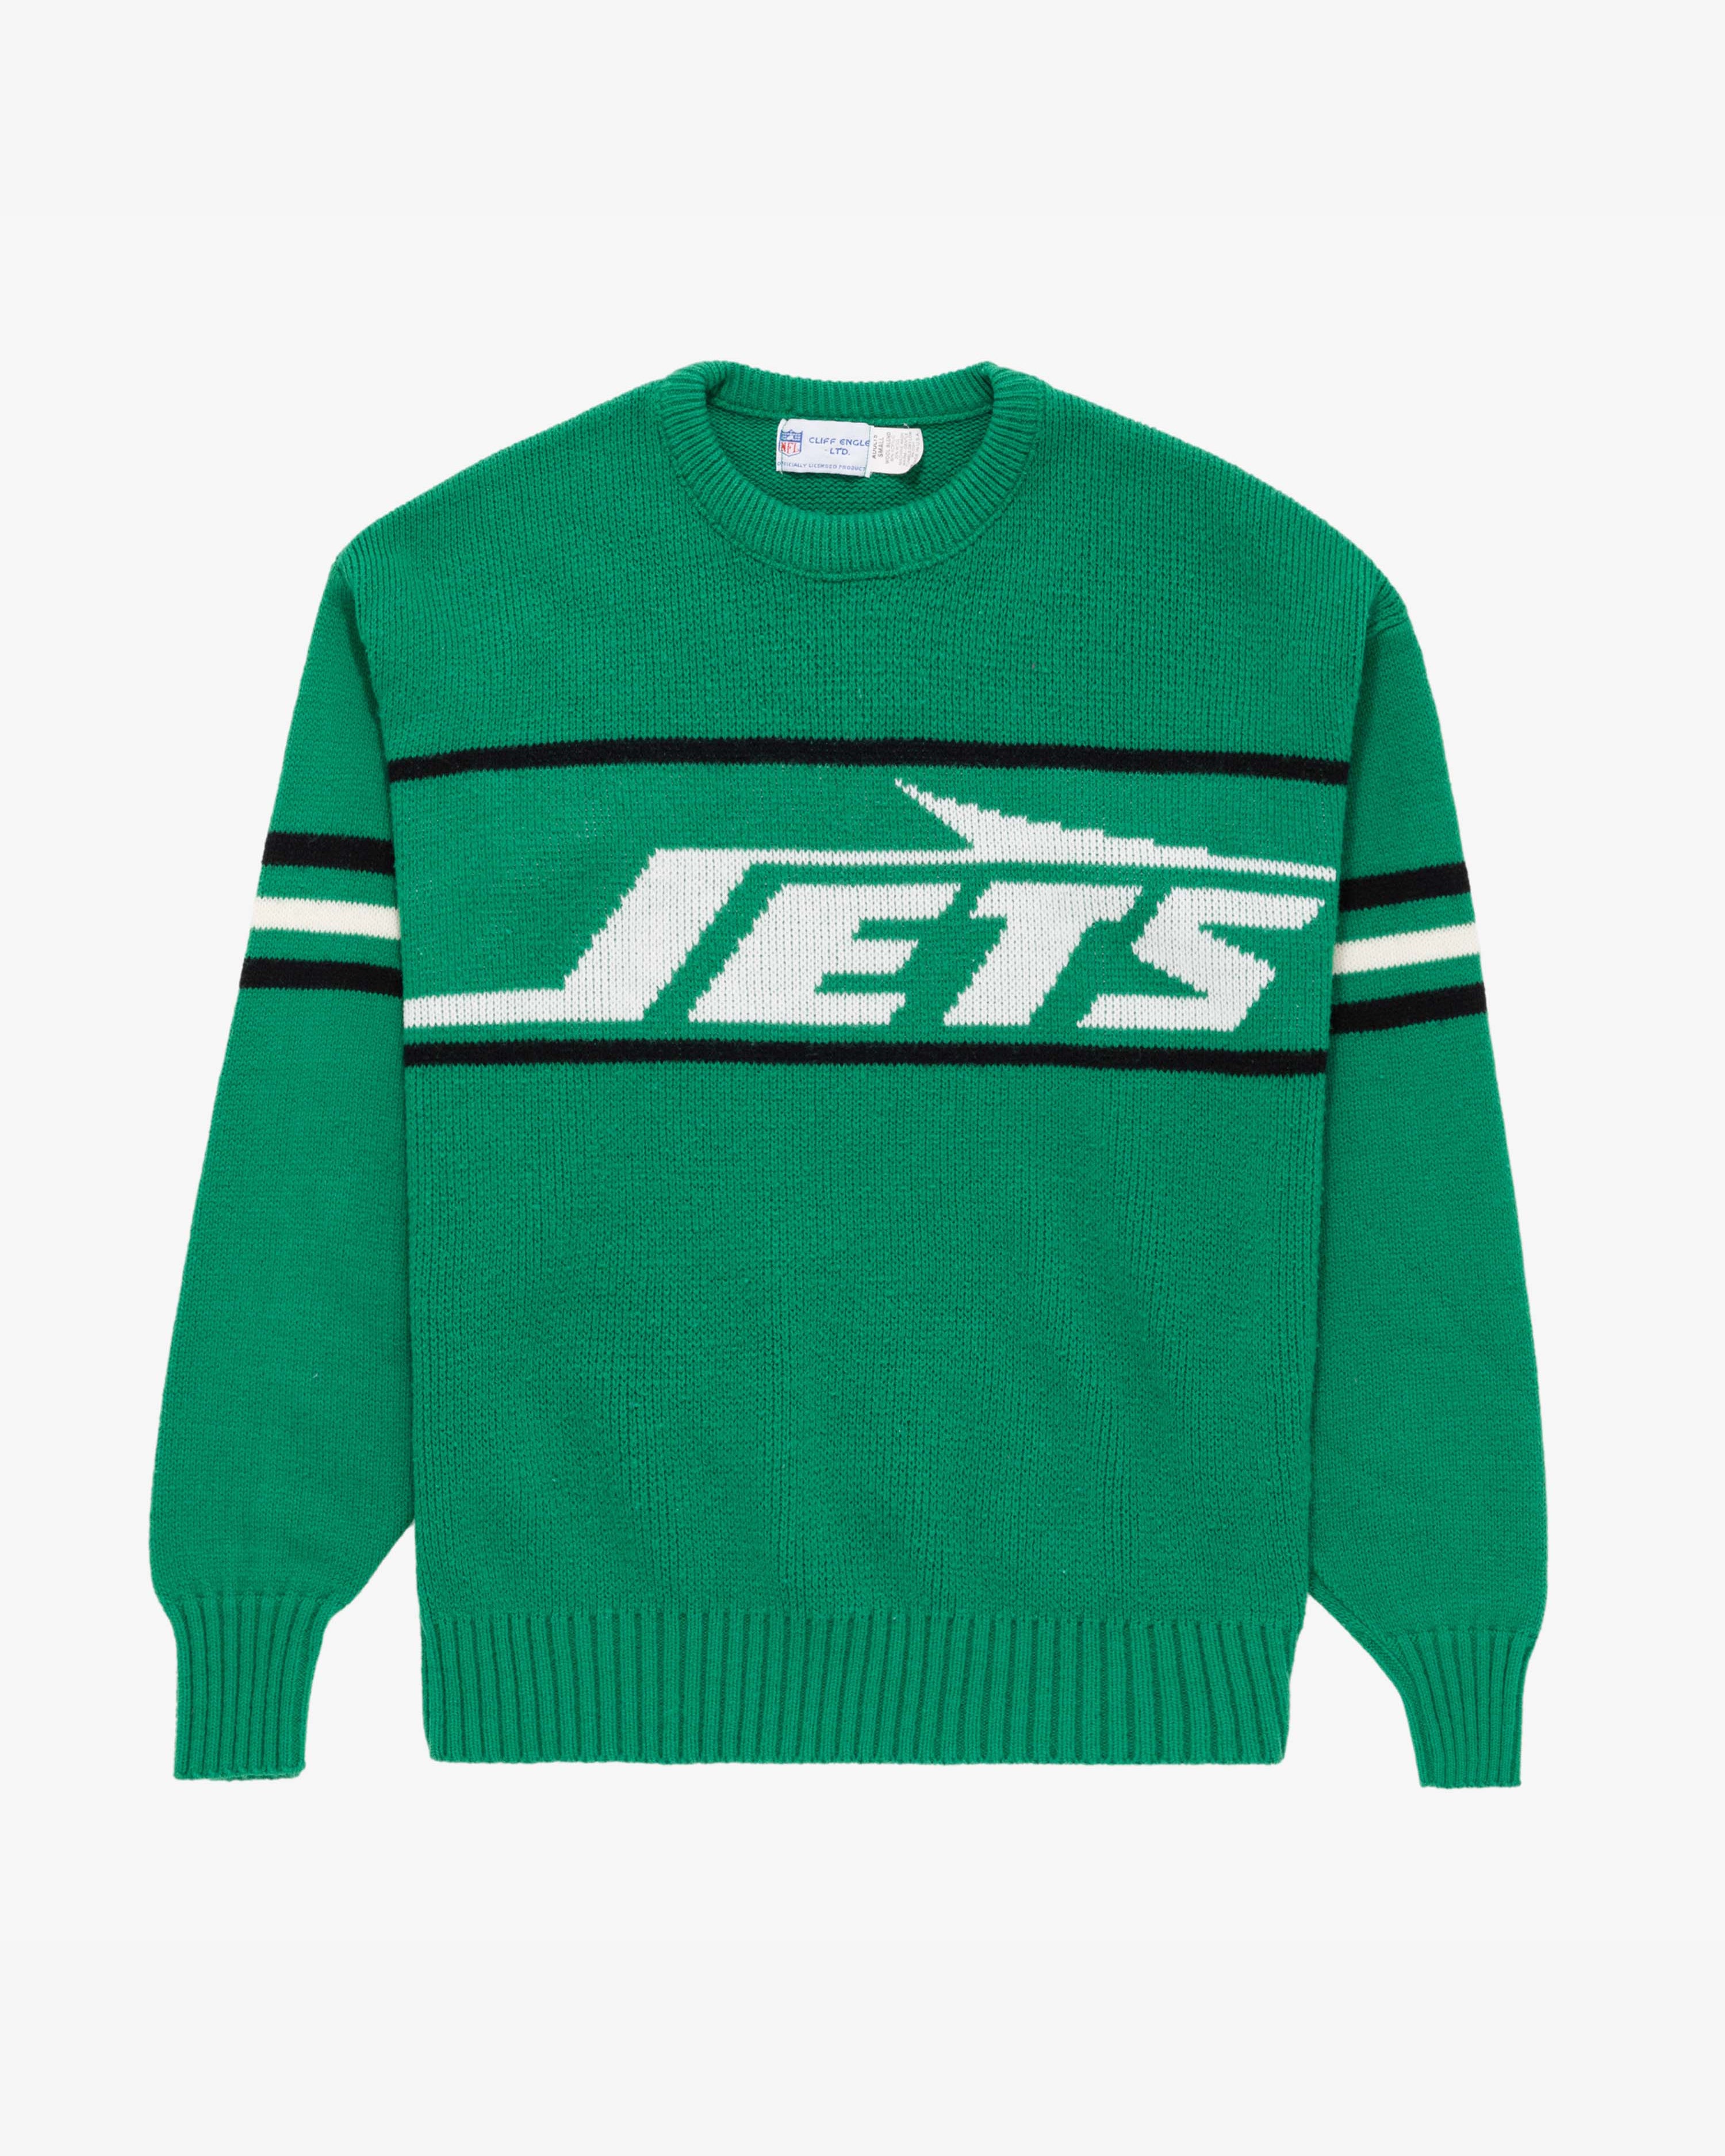 jets sweater